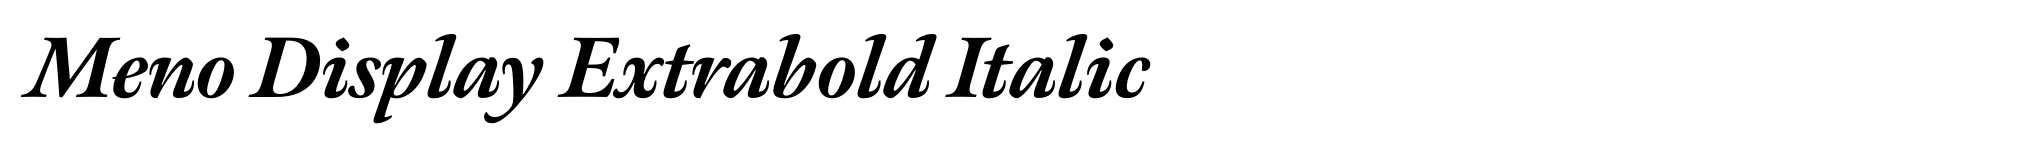 Meno Display Extrabold Italic image